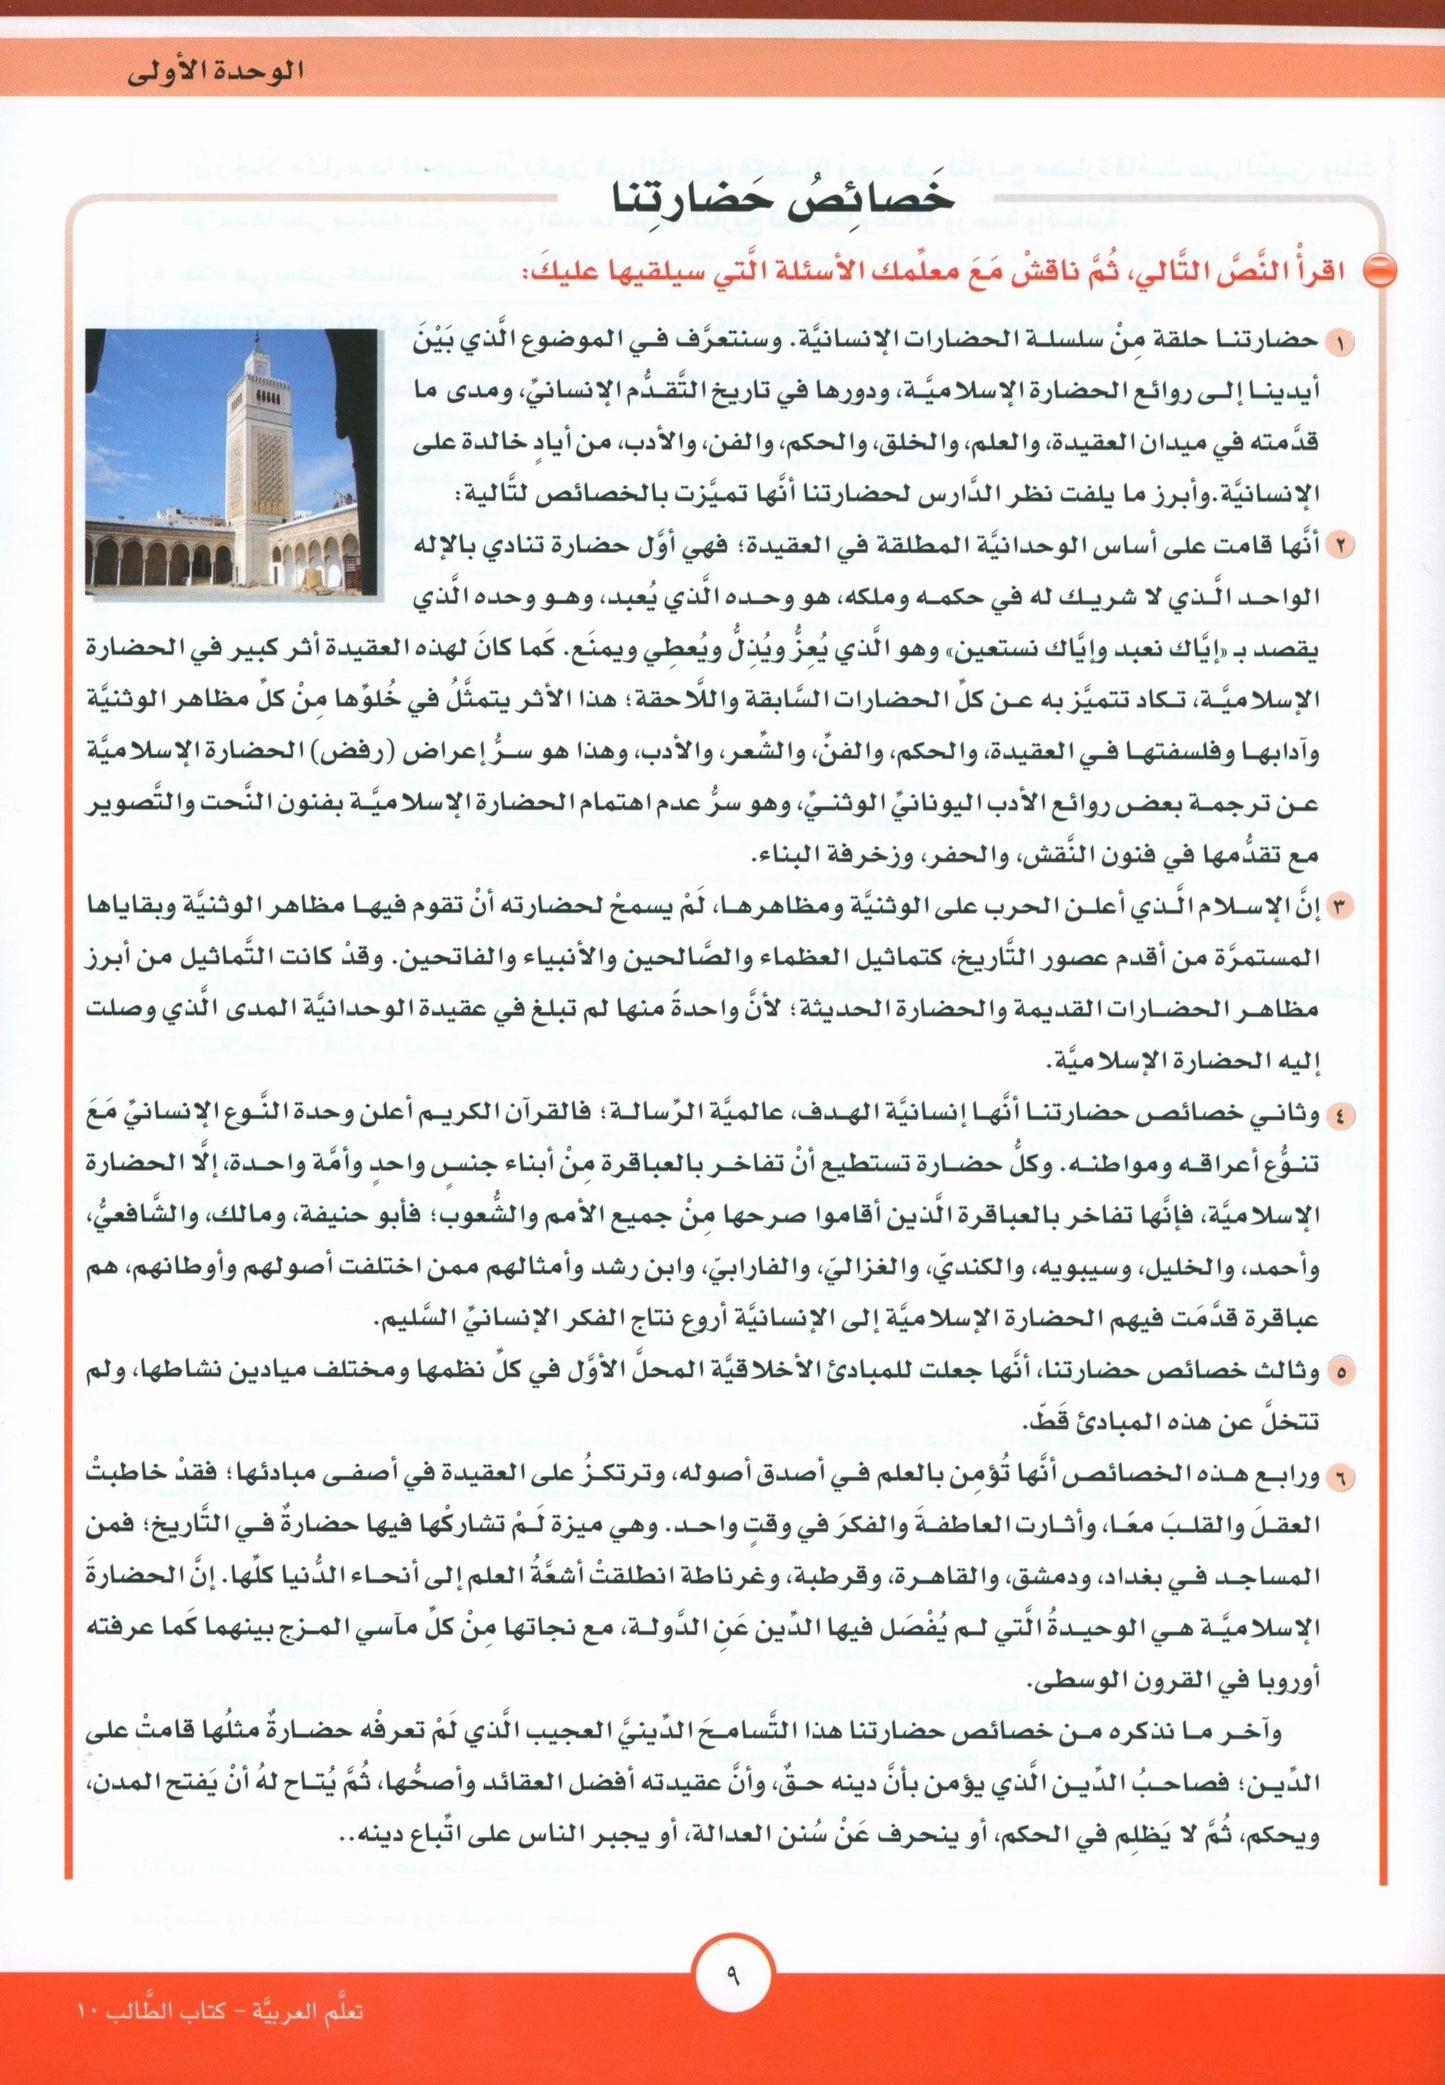 ICO Learn Arabic - Textbook - Level 10 Part 1 - تعلم العربية